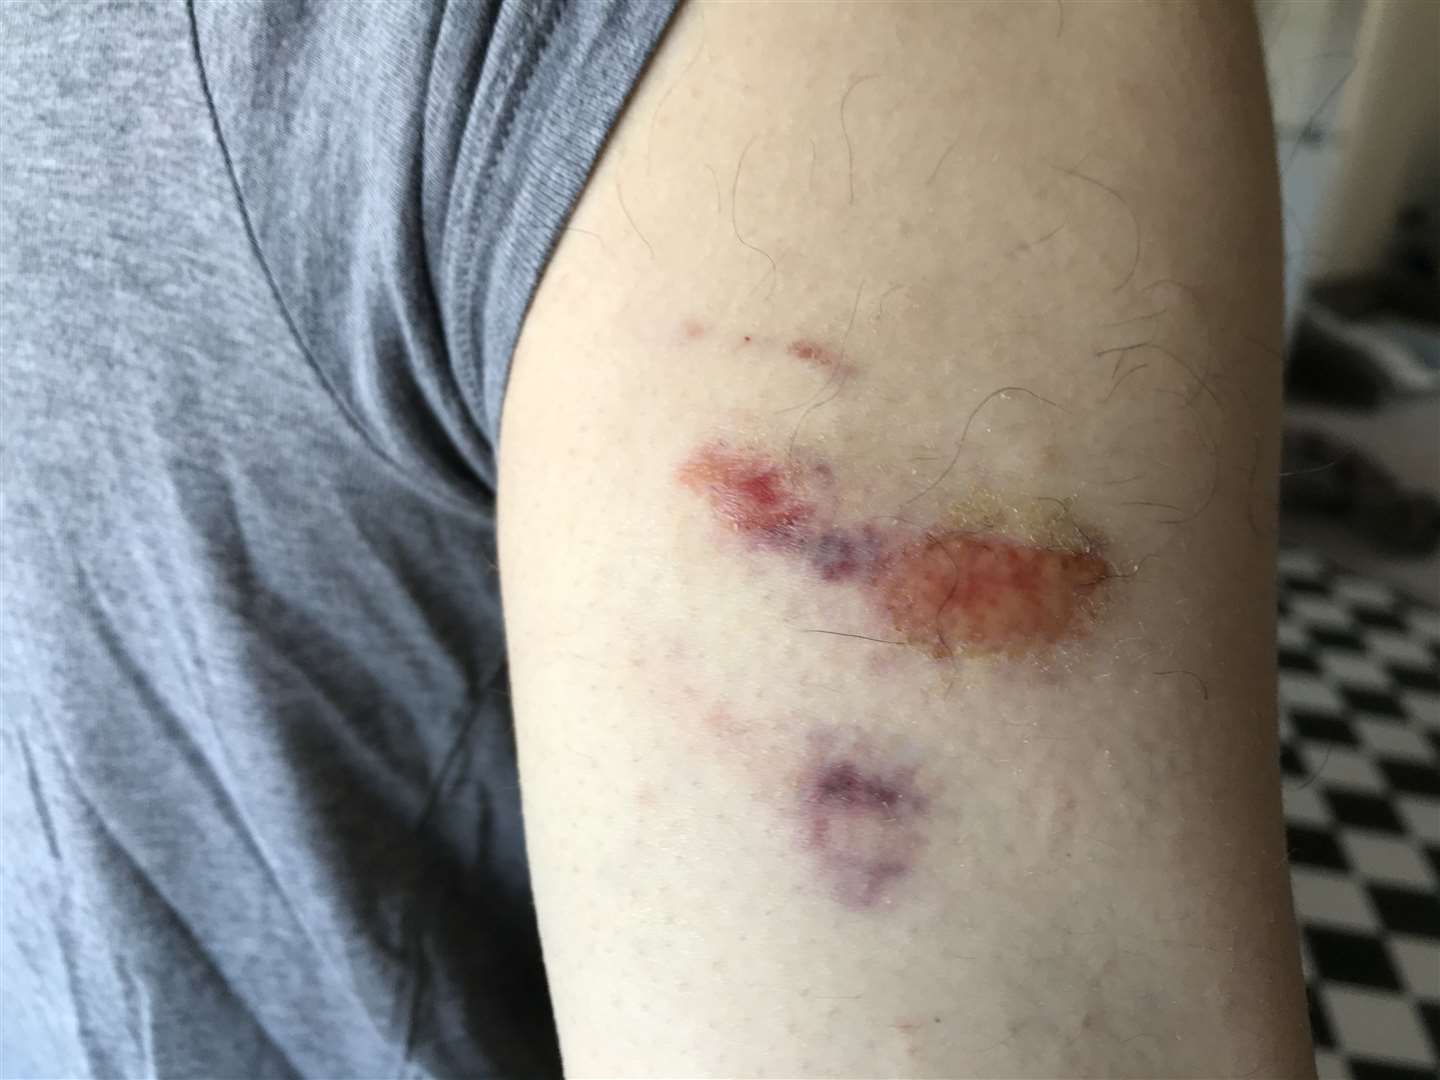 Blair Cowan's arm was bitten by the dog.